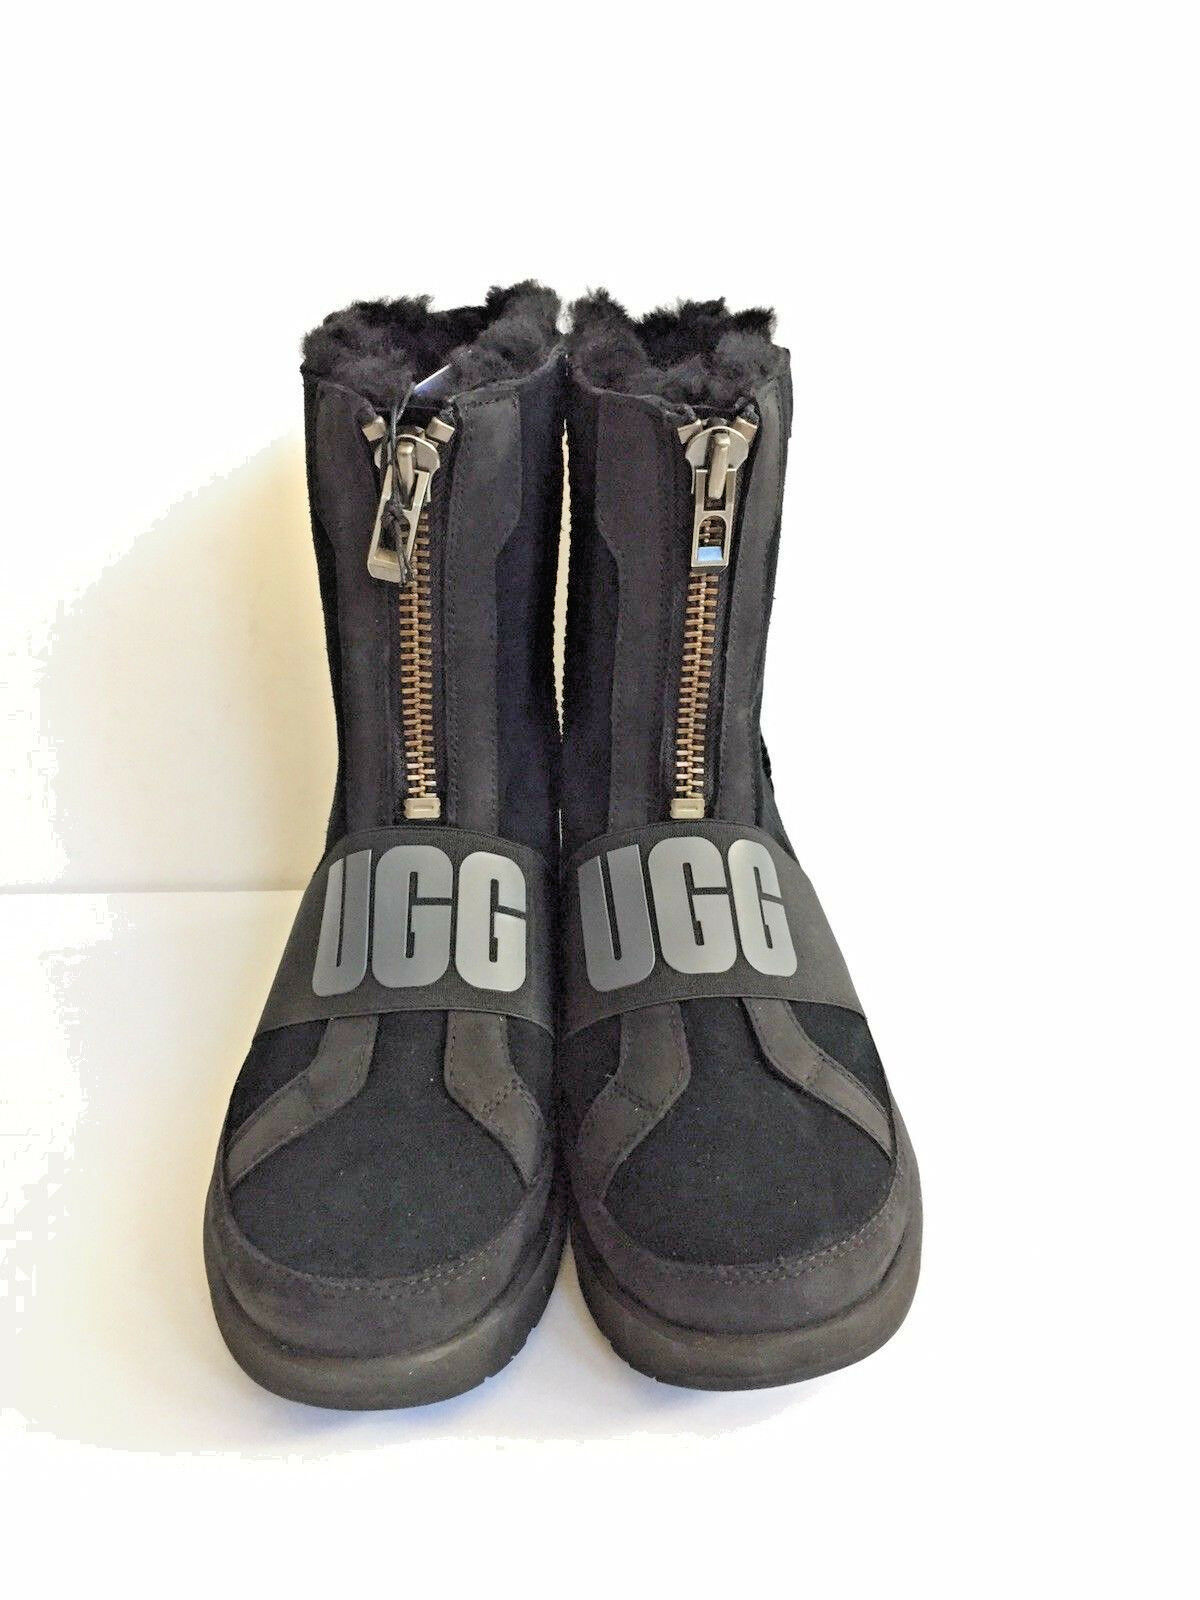 ugg conness waterproof boot